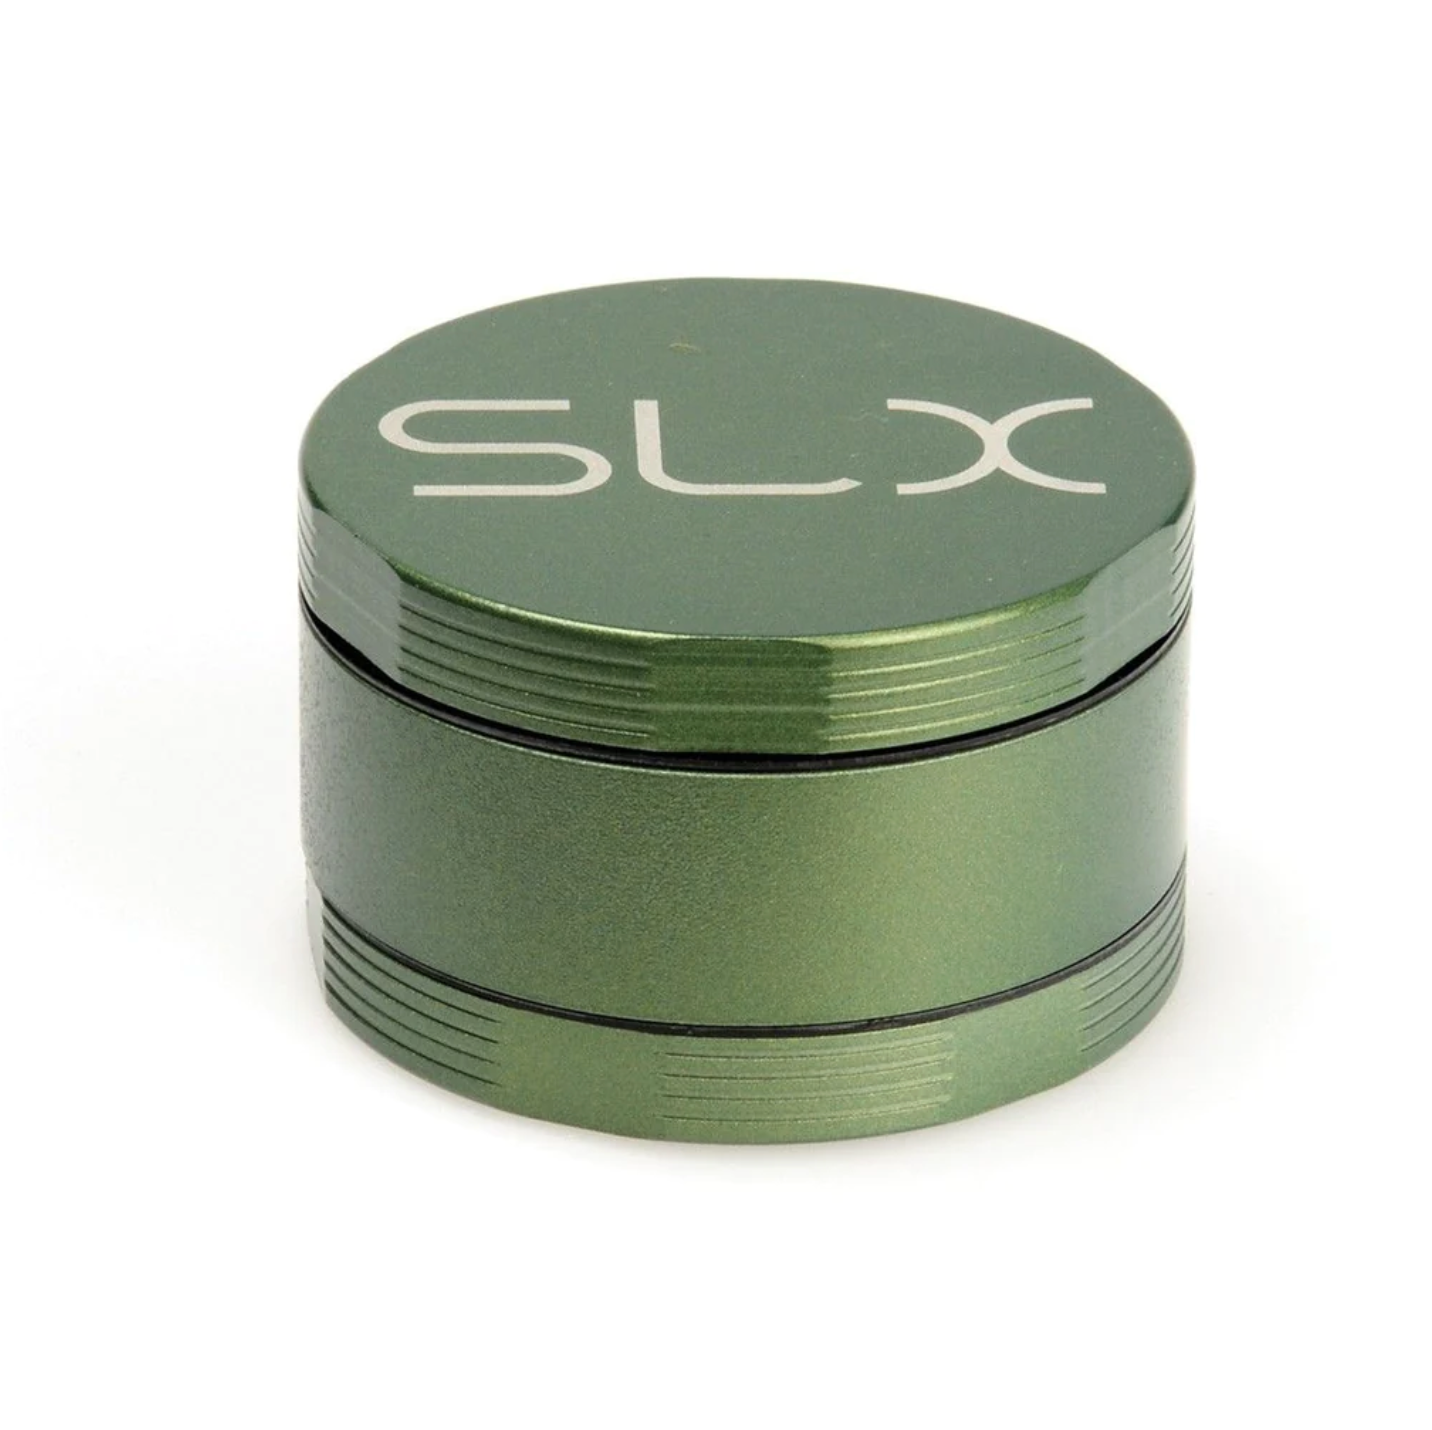 SLX Grinder Céramique 50mm - Vert (4parts)